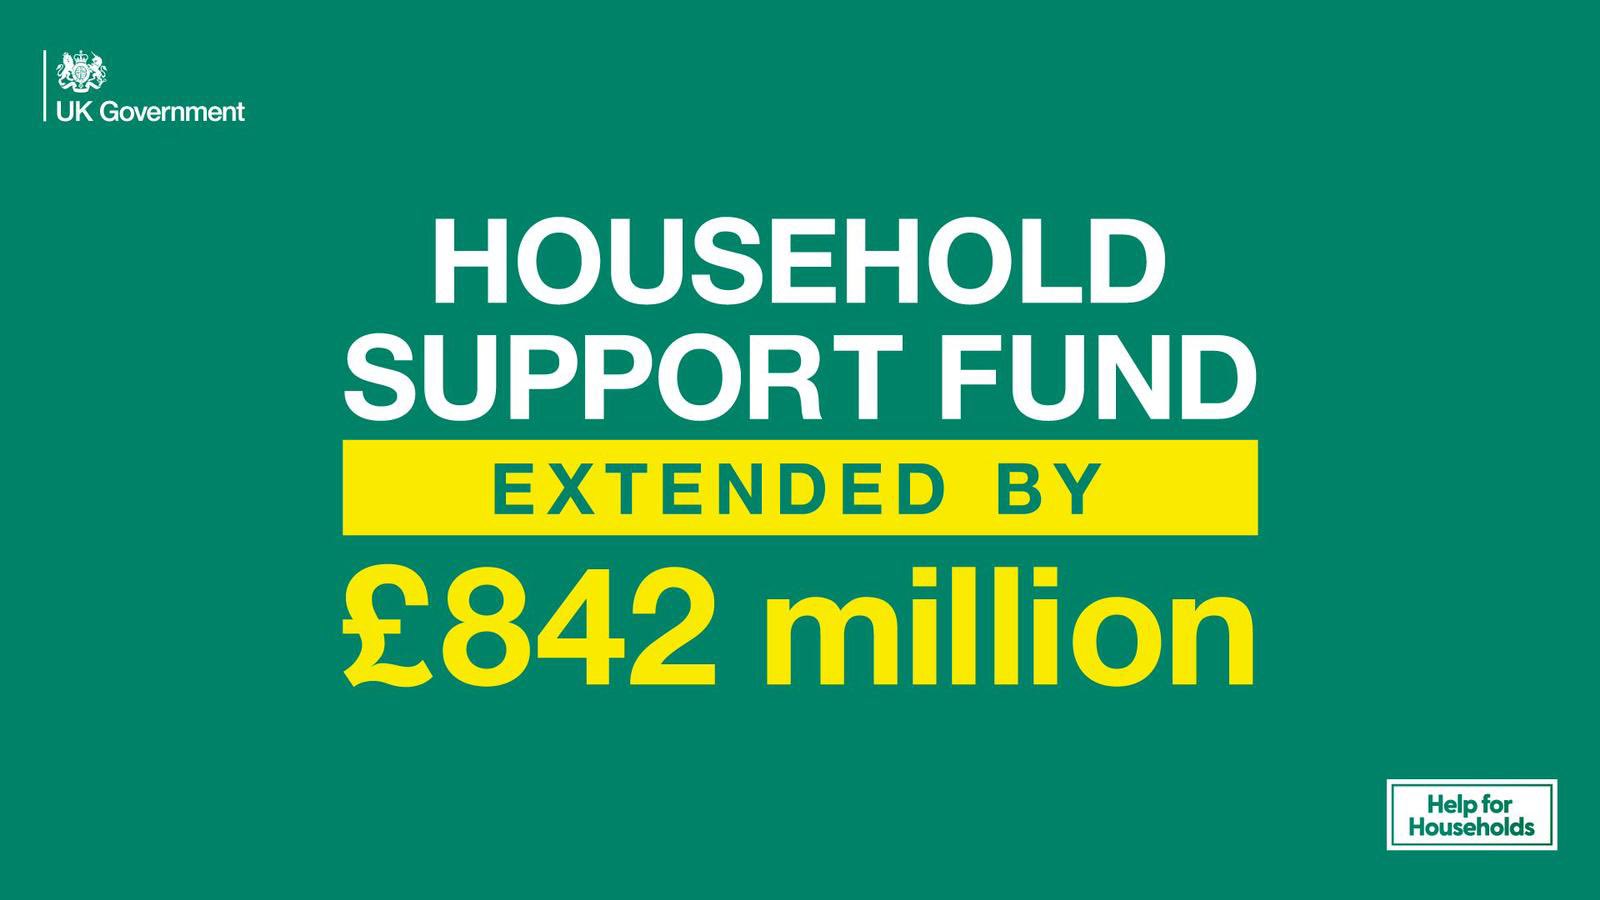 Swindon Awarded £3 Million Through Household Support Fund